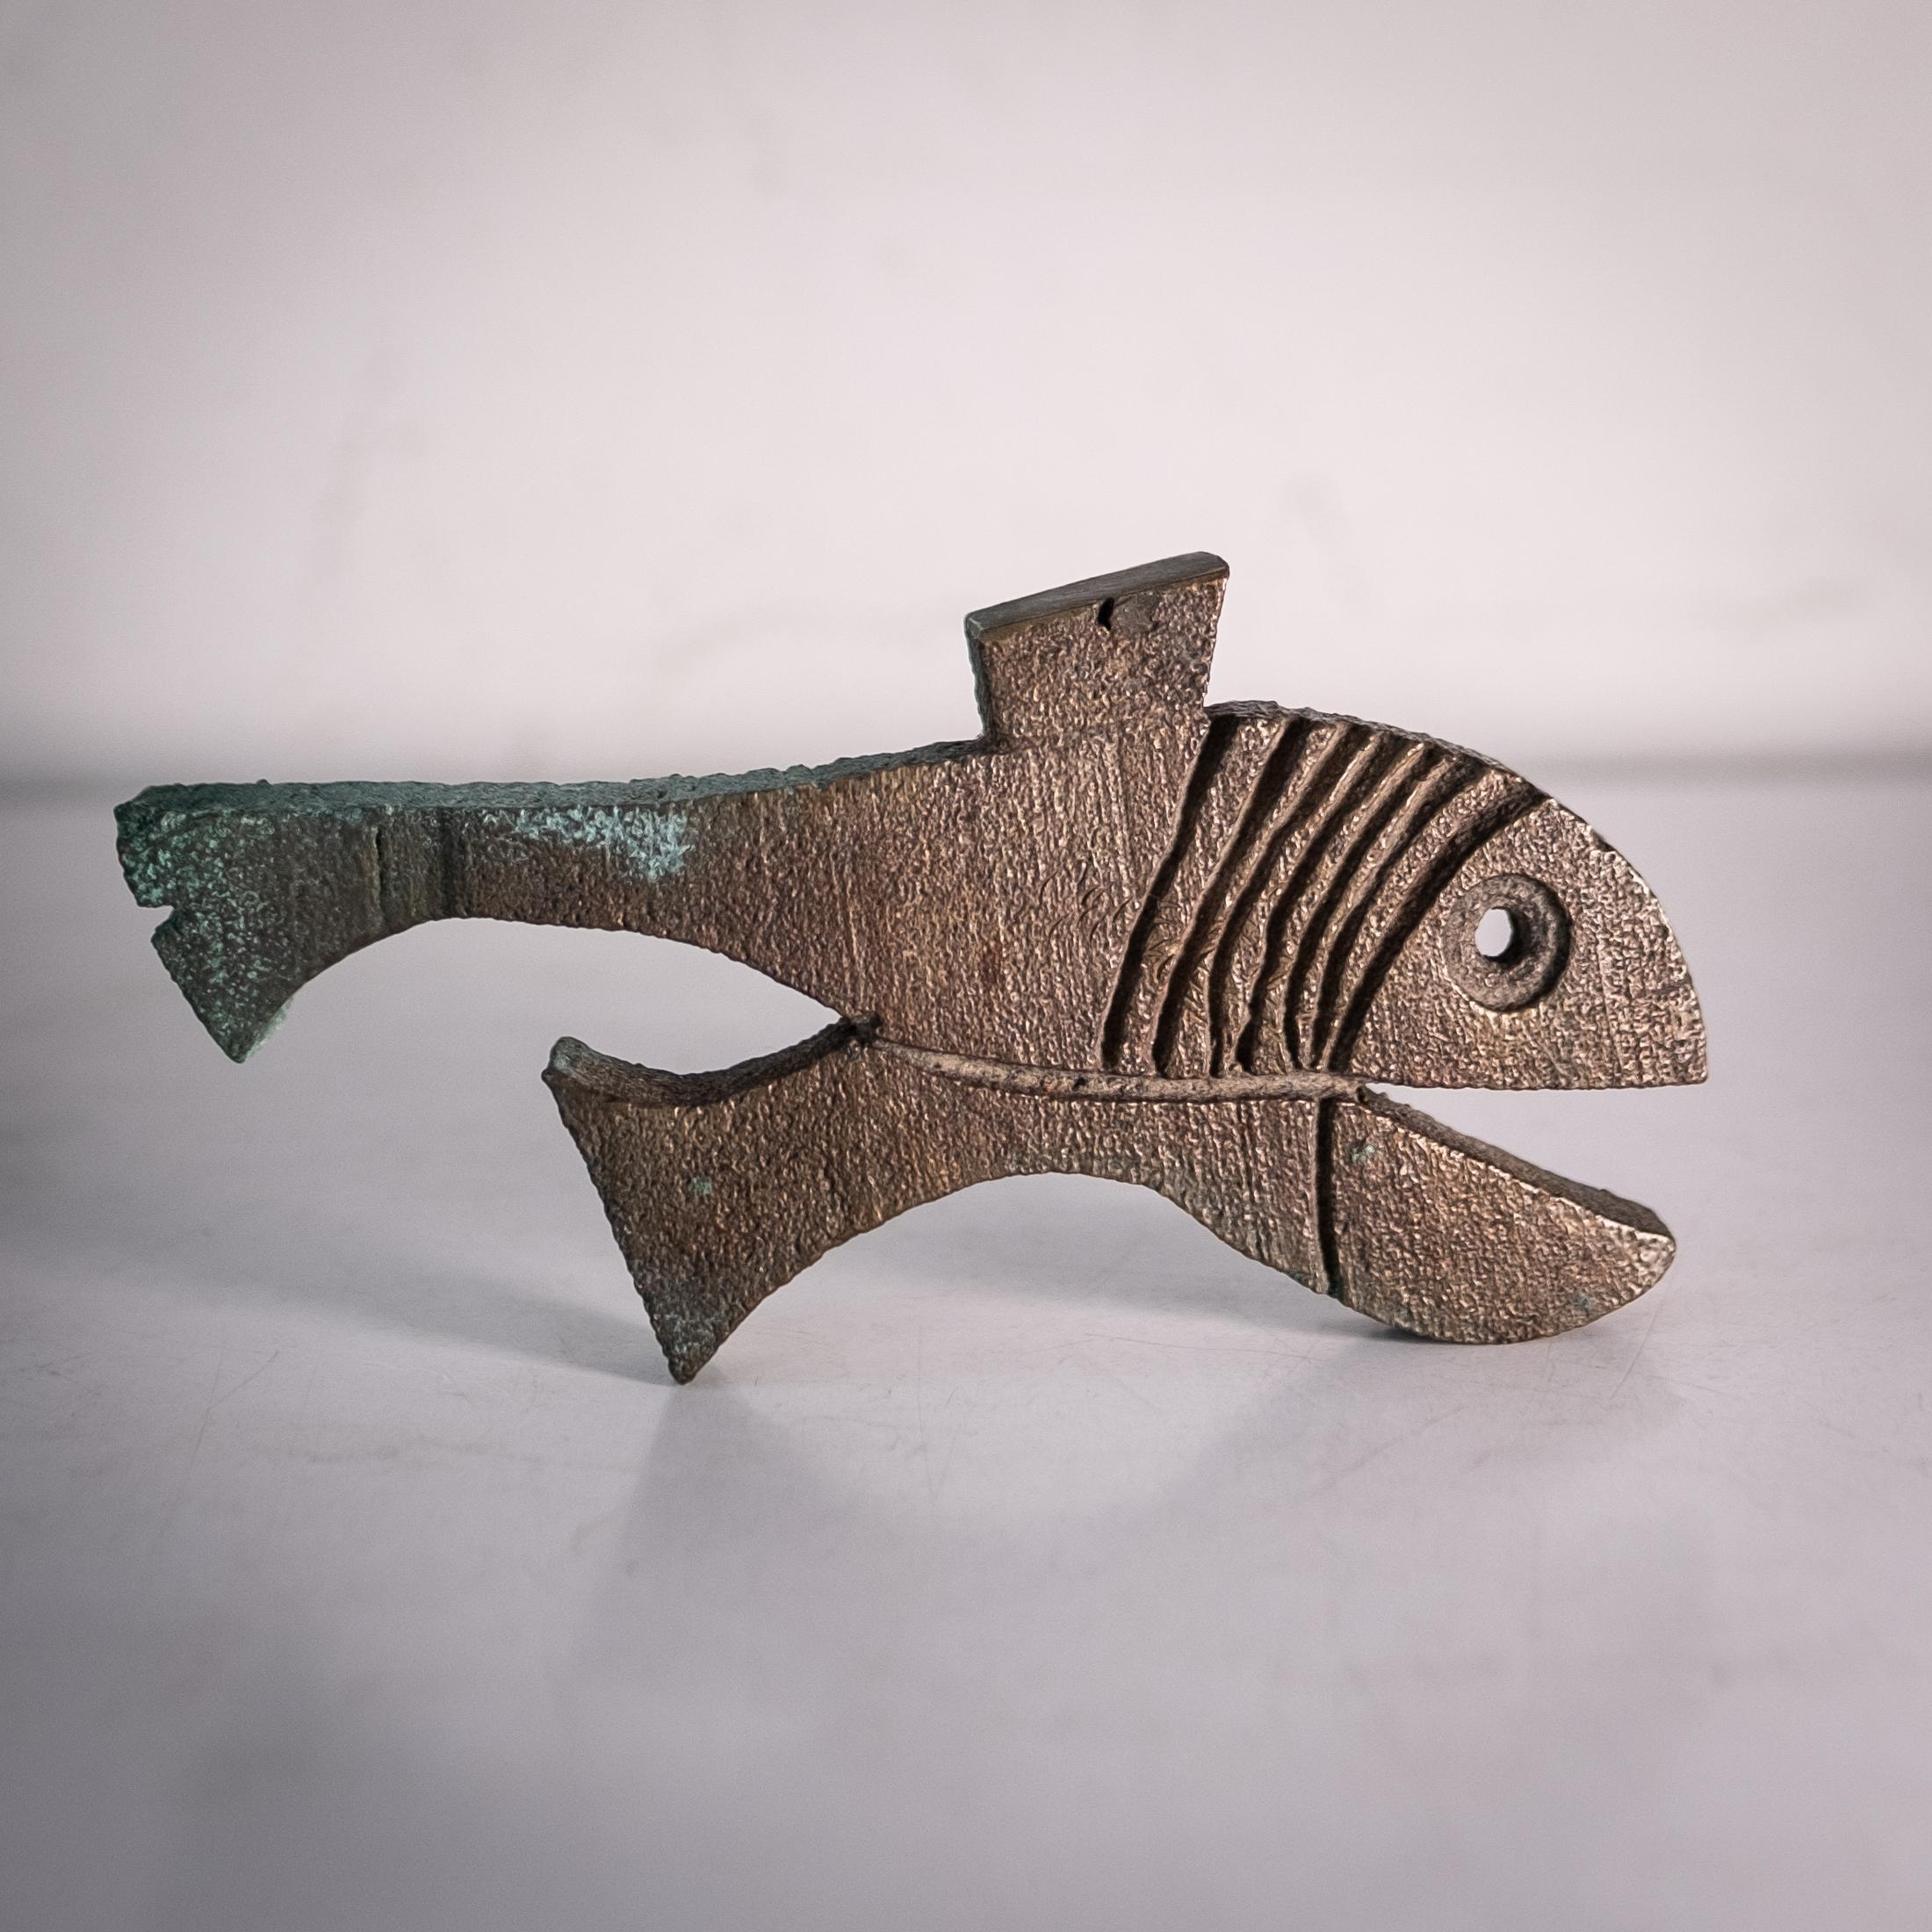 North American Vintage Bronze Fish Sculpture by Paolo Soleri